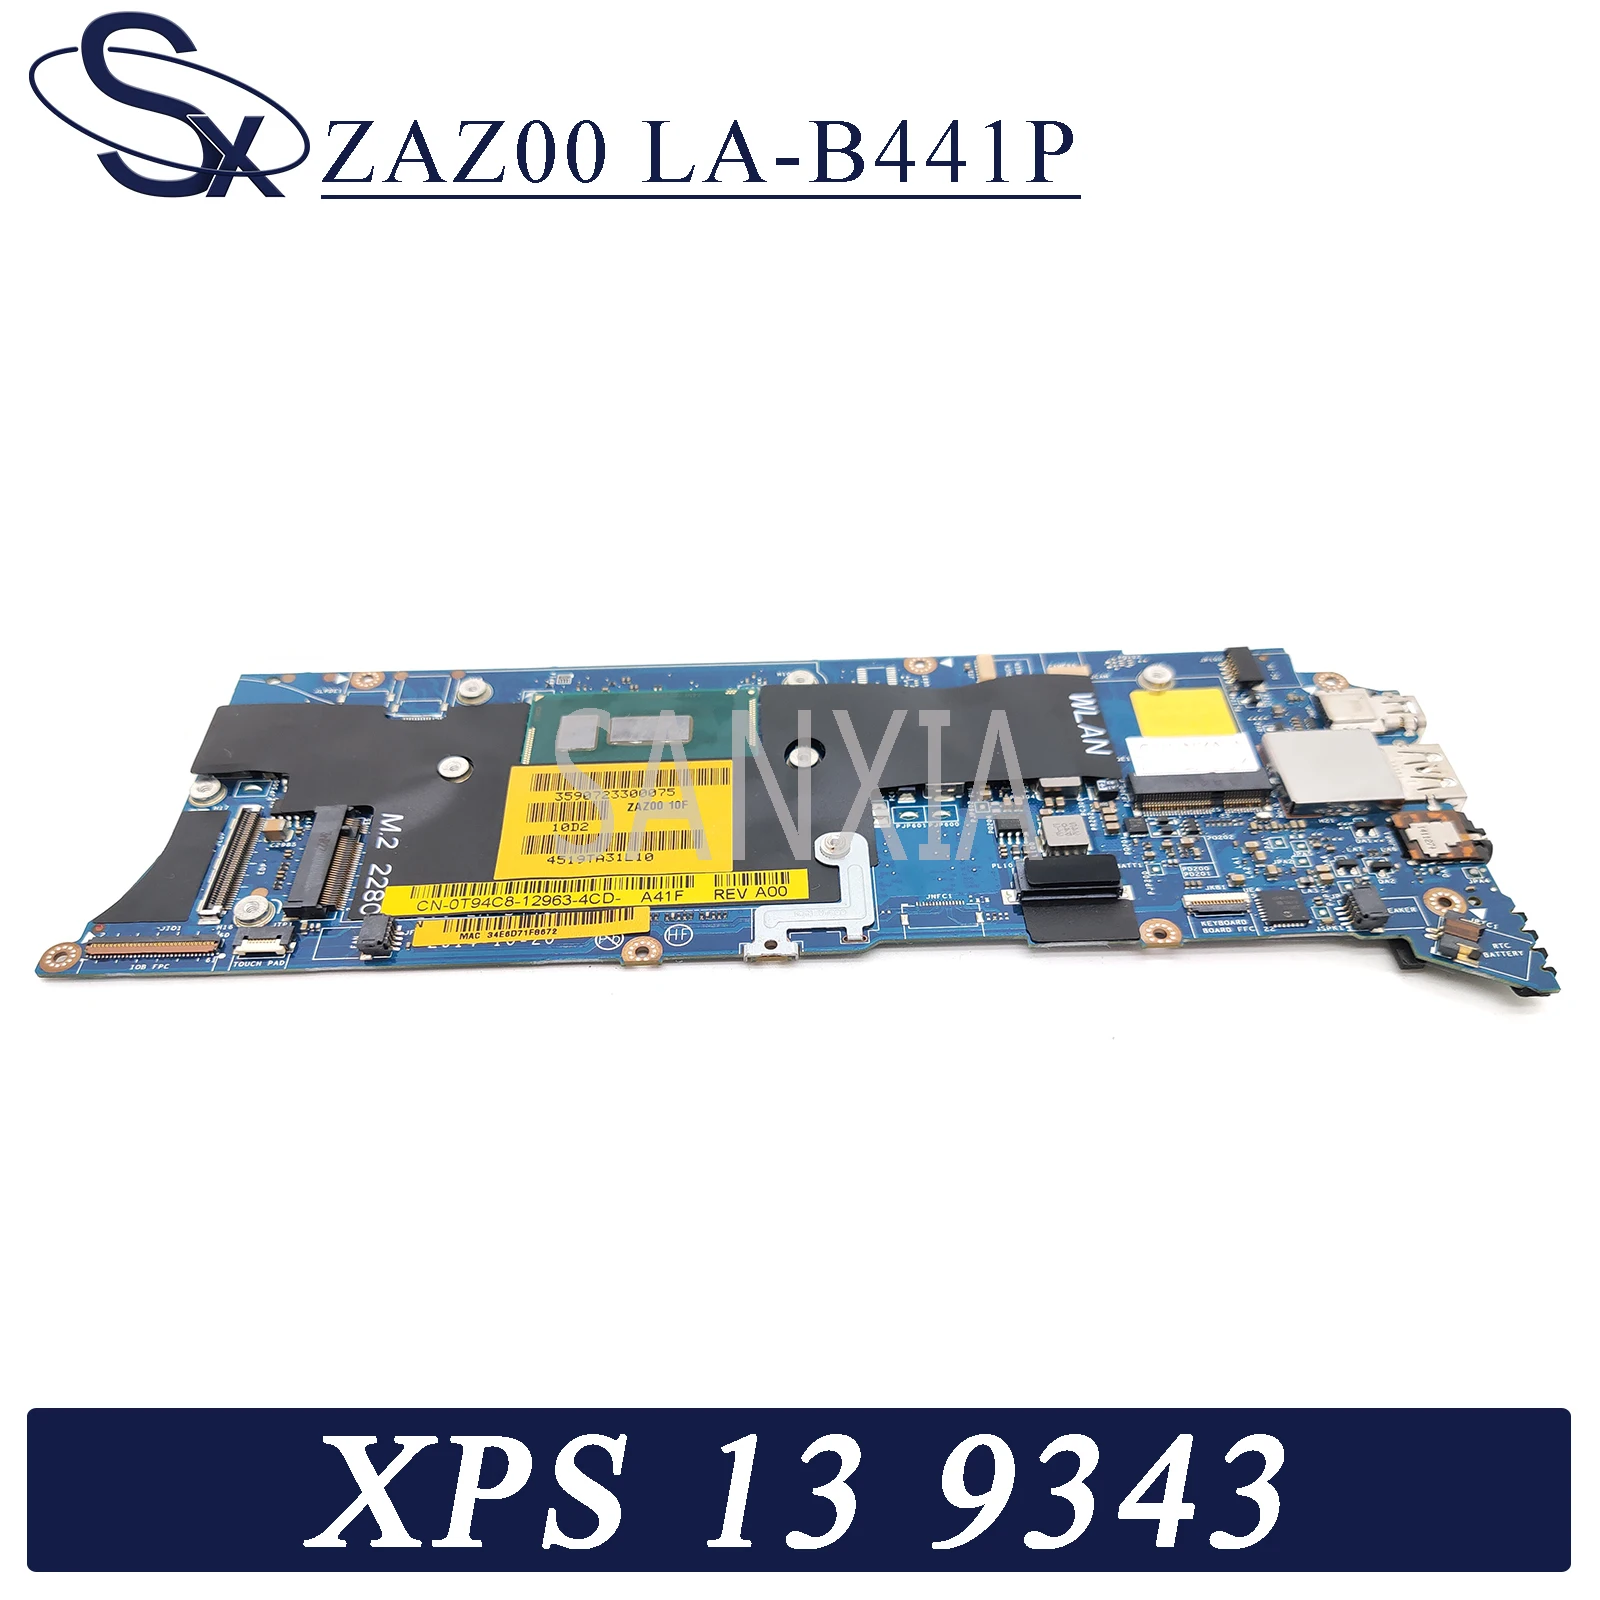 kefu zaz00 la b441p laptop motherboard for dell xps 13 9343 original mainboard ddr3l 8gb ram i7 5500u free global shipping